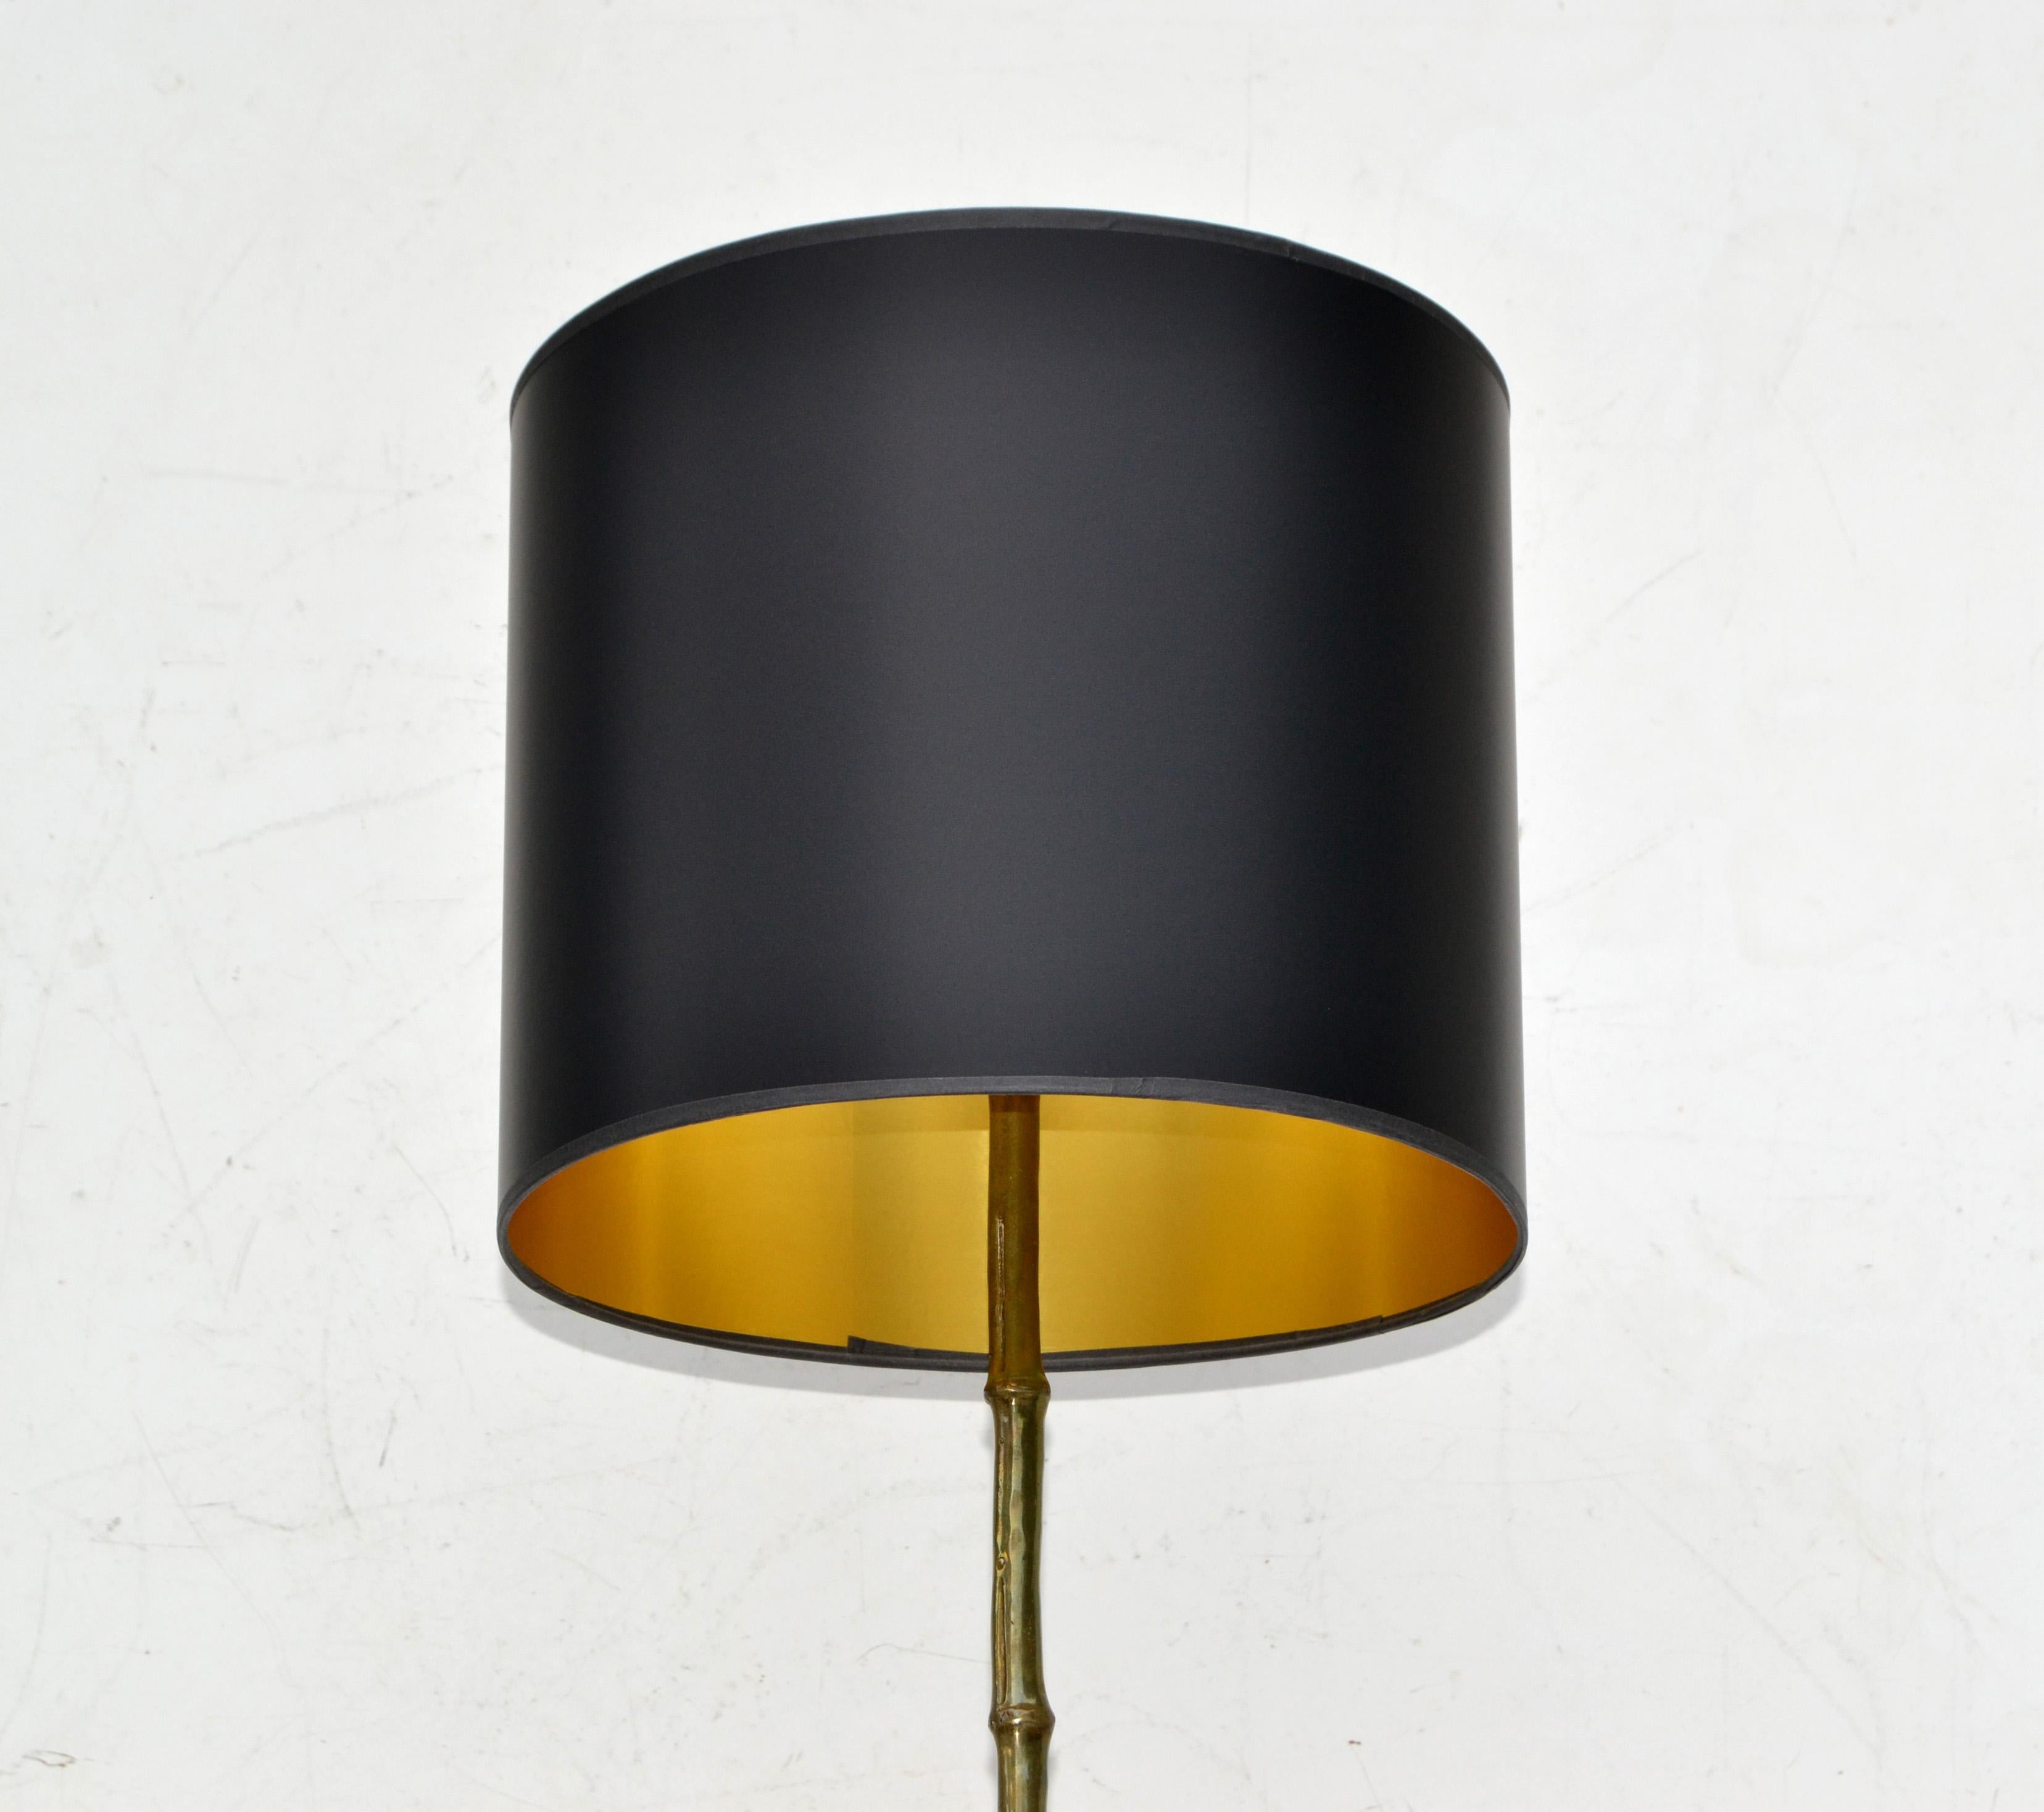 Maison Baguès Bronze Floor Lamp France Neoclassical Black & Gold Shade 1950 For Sale 4